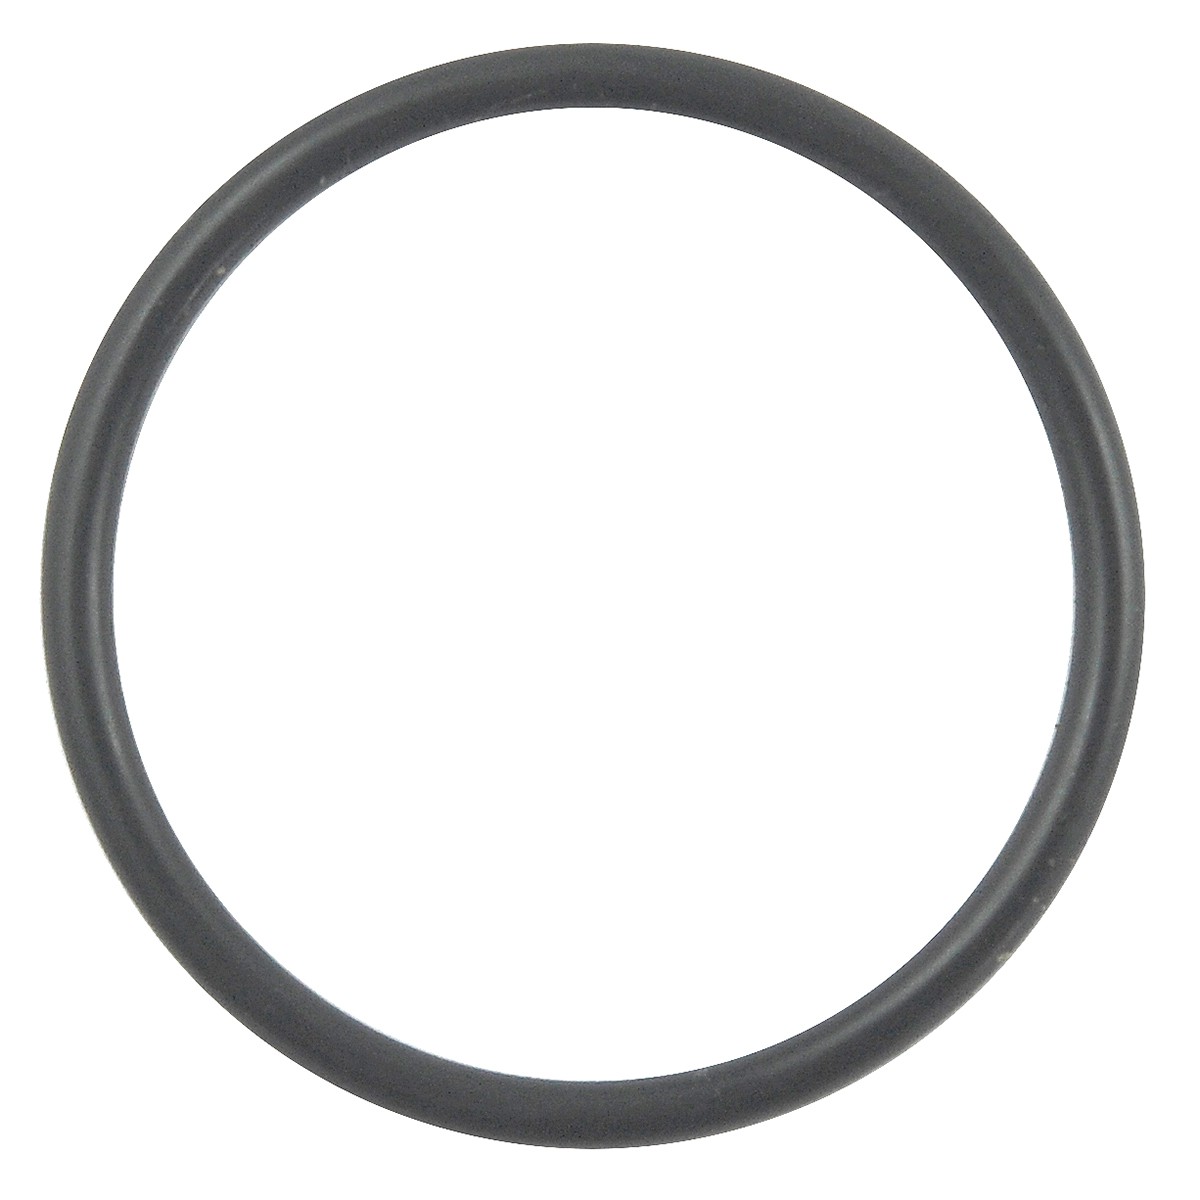 O-ring / 3.50 x 48.50 mm / Kubota L185/M4900/M4950/M5000M5950 / 04811-50450 / 04816-50450 / 5-27-100-09